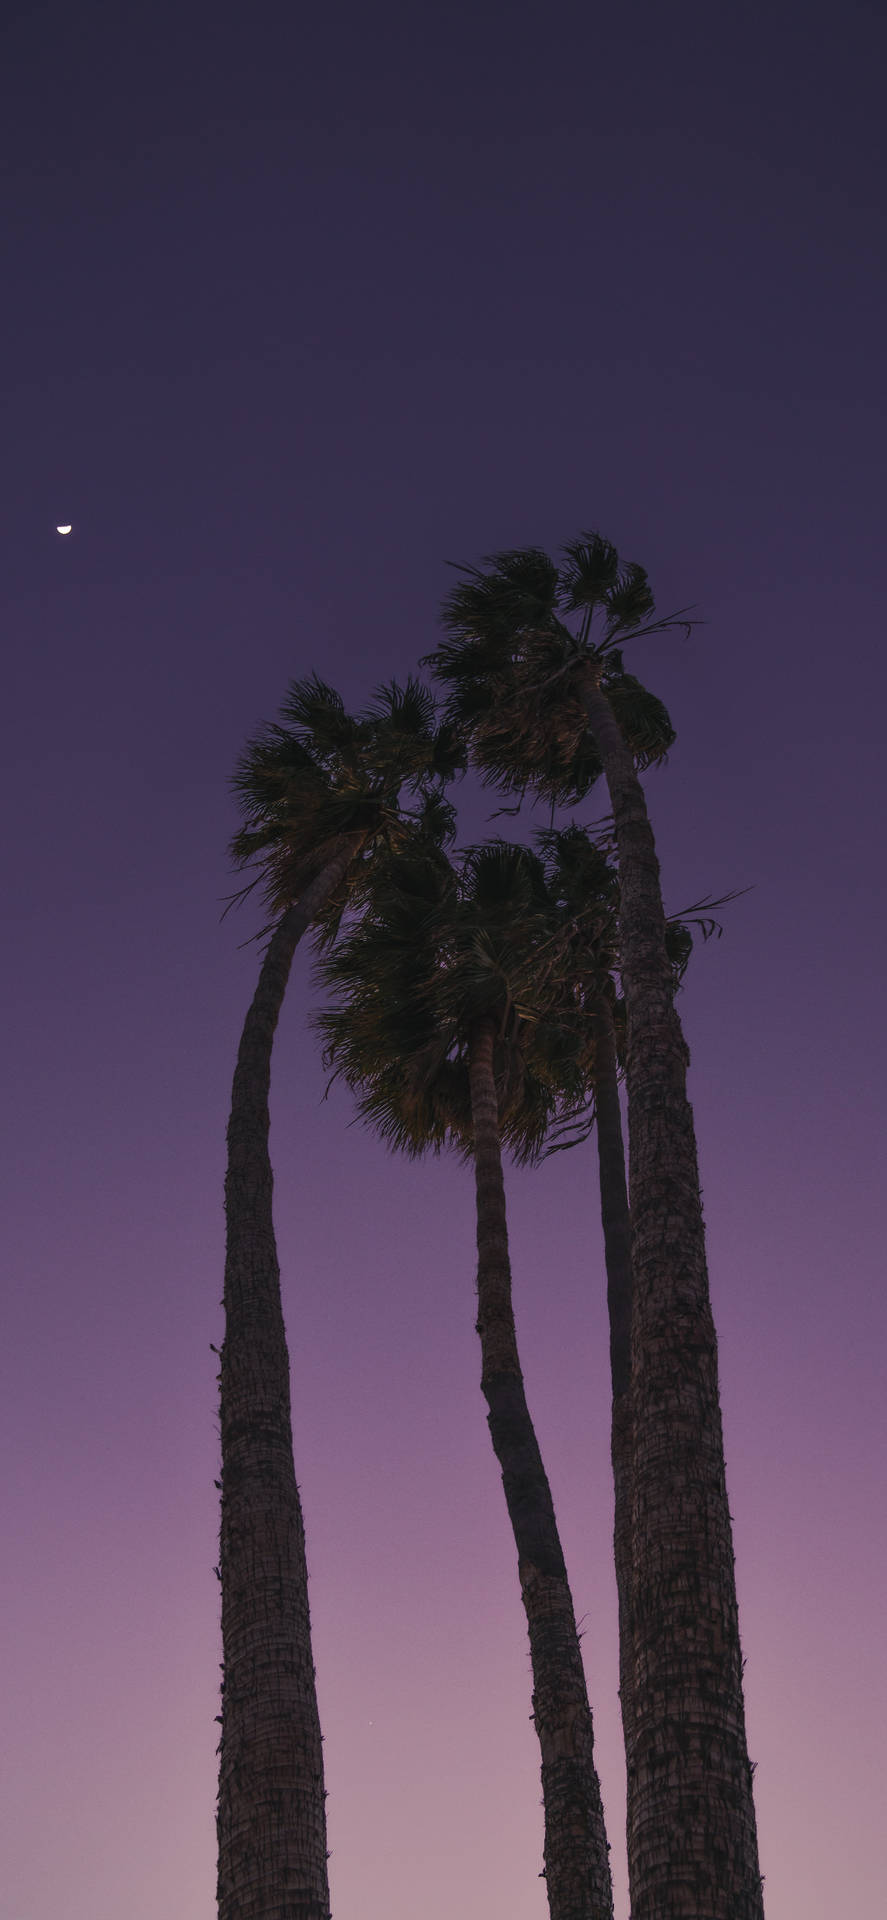 Palm Trees Dark Purple Sky Background